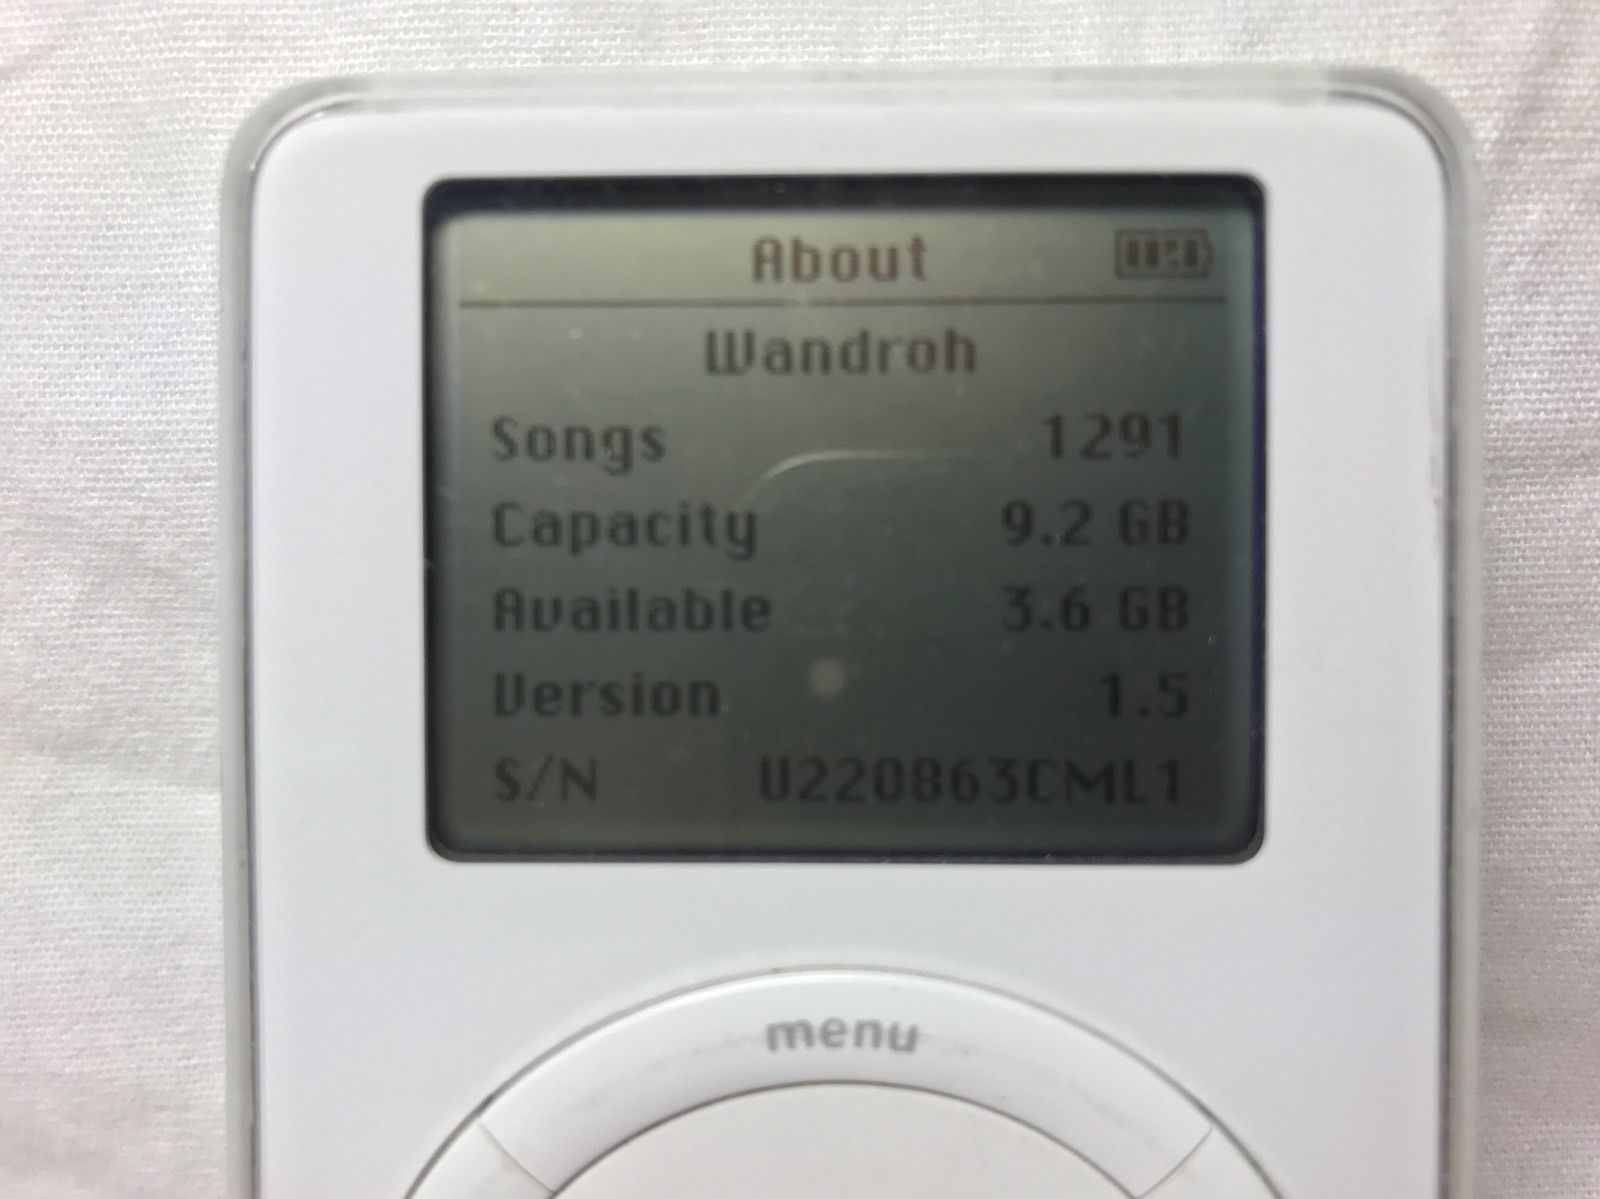 $100K Apple iPod Prototype sells on eBay